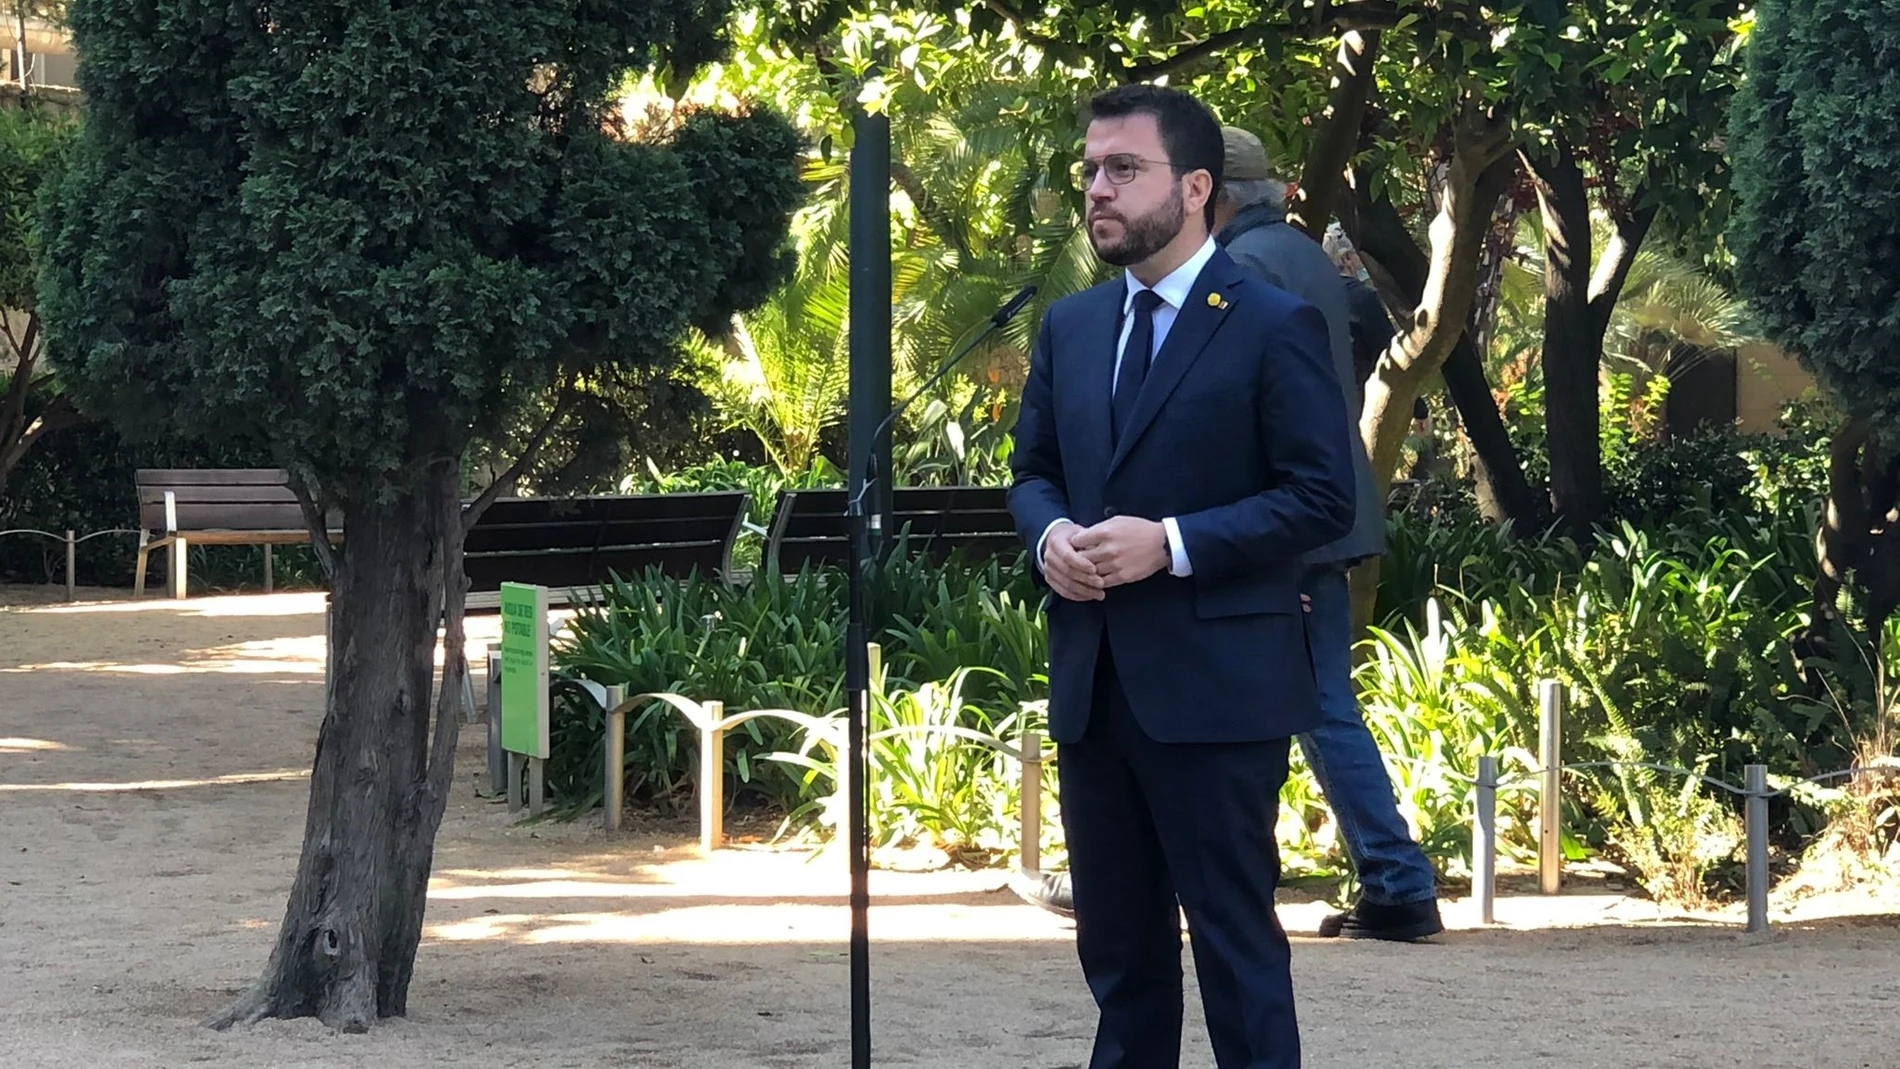 El vicepresidente del Govern en funciones, Pere Aragonès, el 23 de abril de 2021 en el Palau Robert de Barcelona.EUROPA PRESS